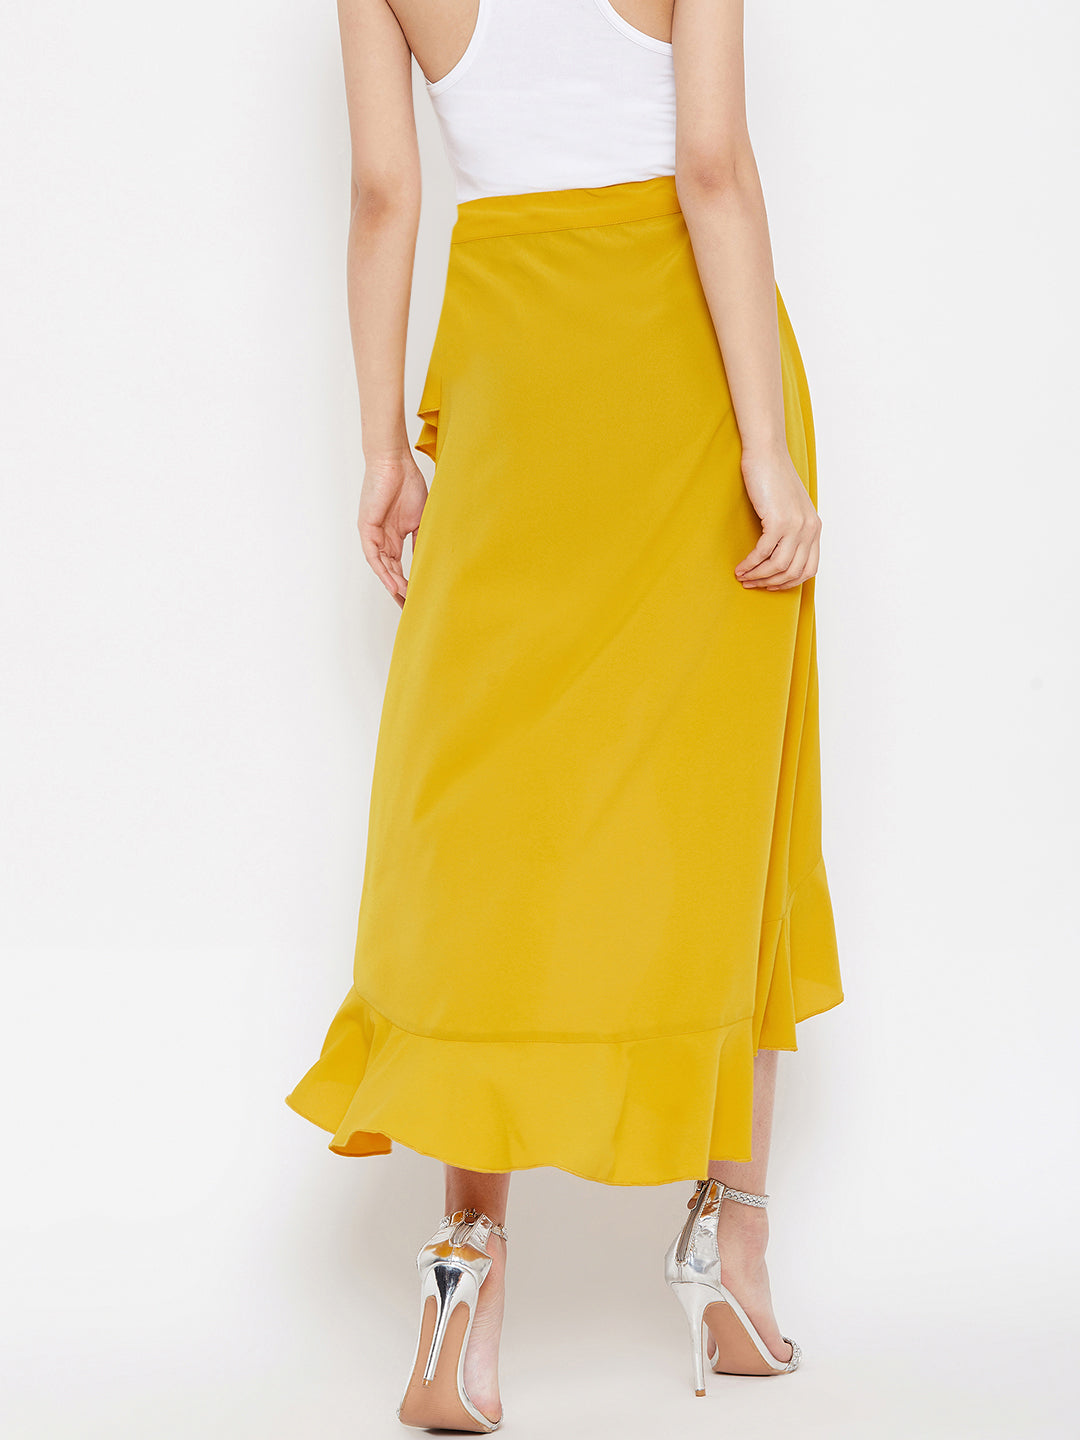 Buy Yayun Women's Loose African Print High Waist Belt Swing High Low Maxi Skirt  Yellow XL at Amazon.in